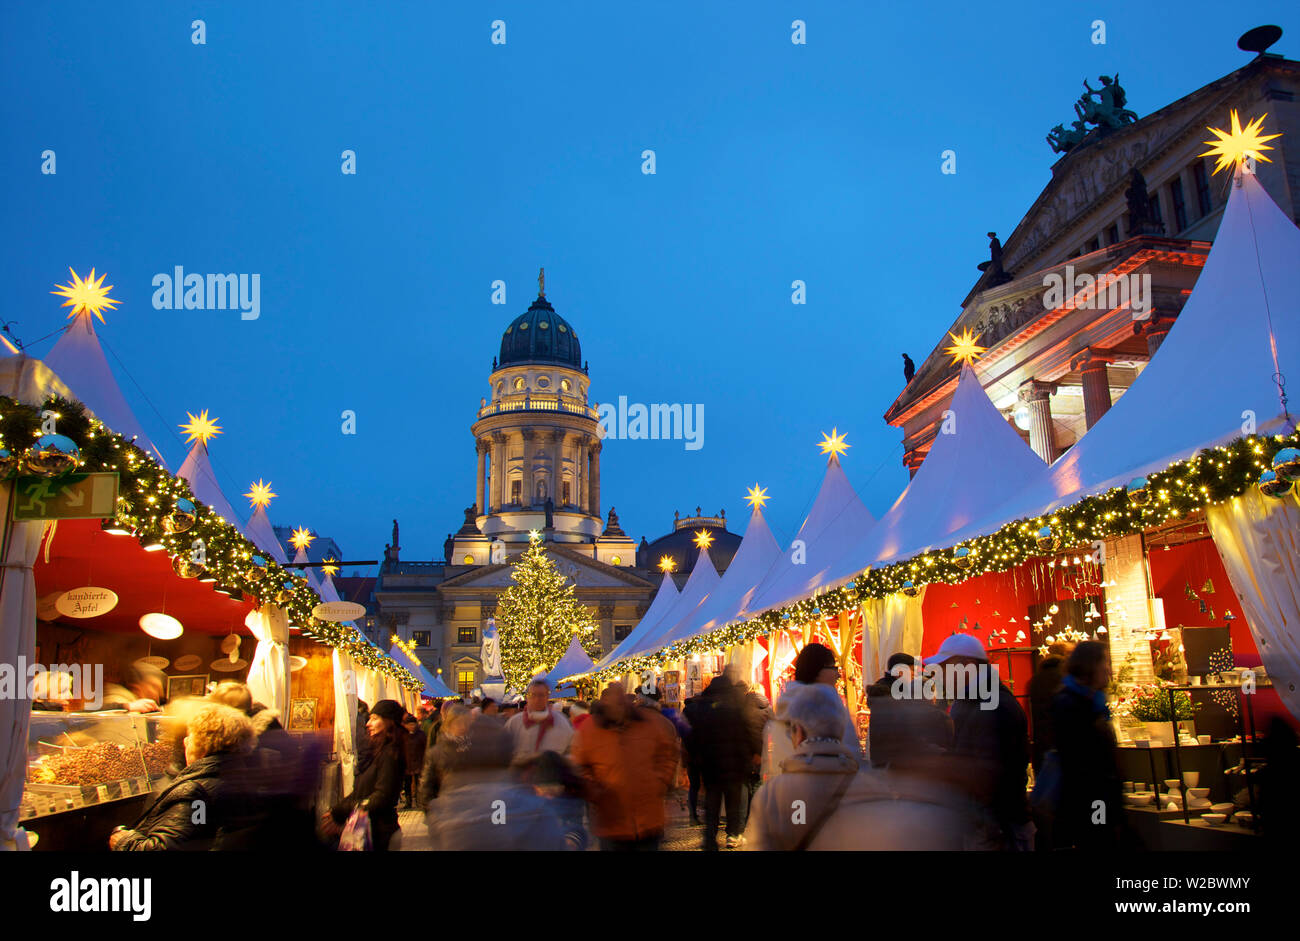 Xmas Market, German Cathedral, Gendarmenmarkt, Berlin, Germany, Europe. Stock Photo